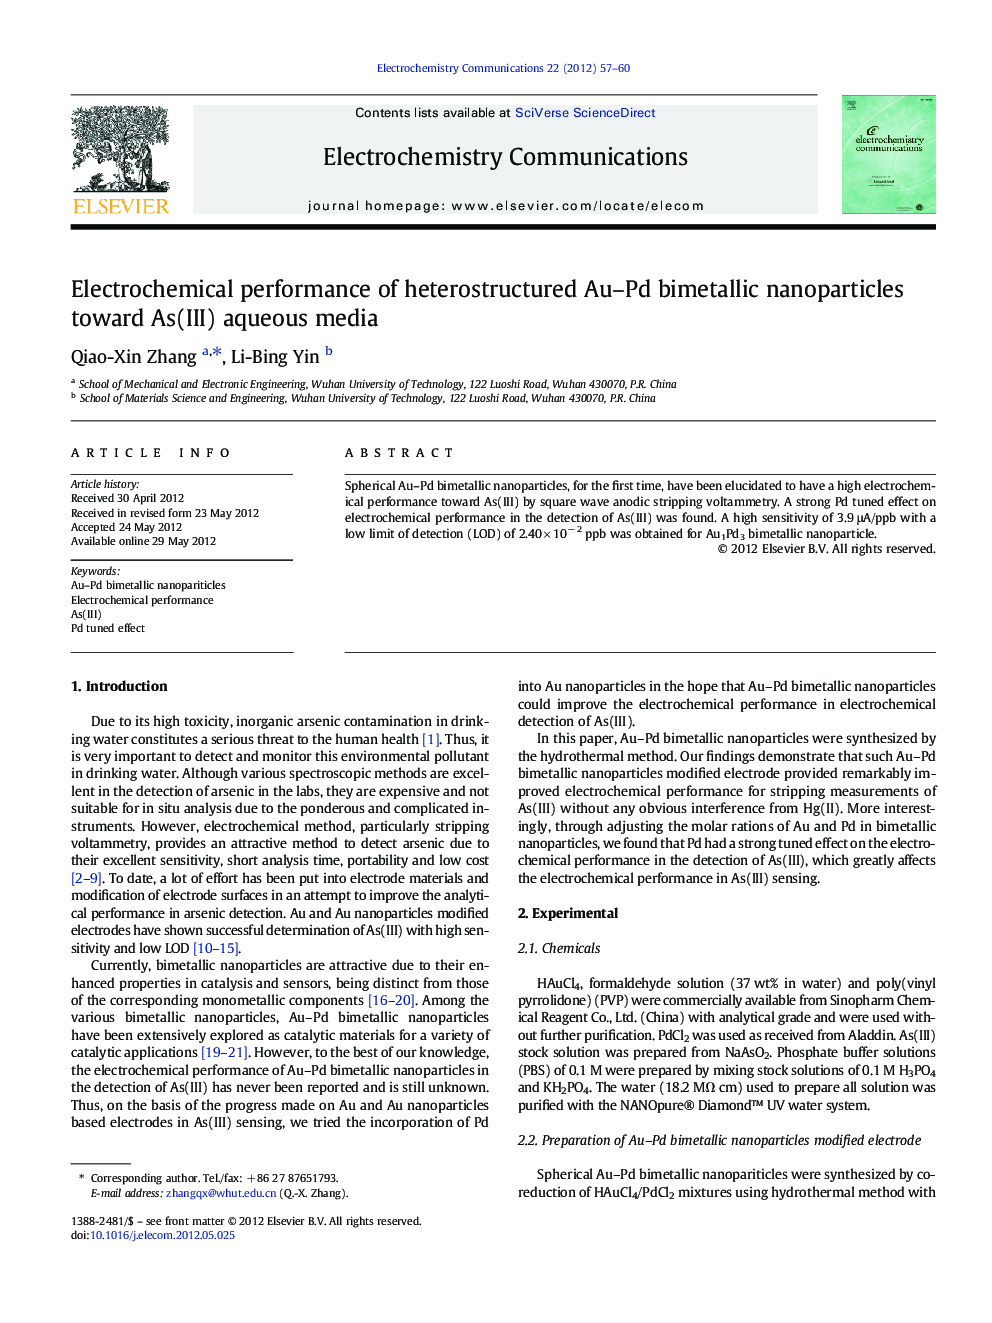 Electrochemical performance of heterostructured Au–Pd bimetallic nanoparticles toward As(III) aqueous media